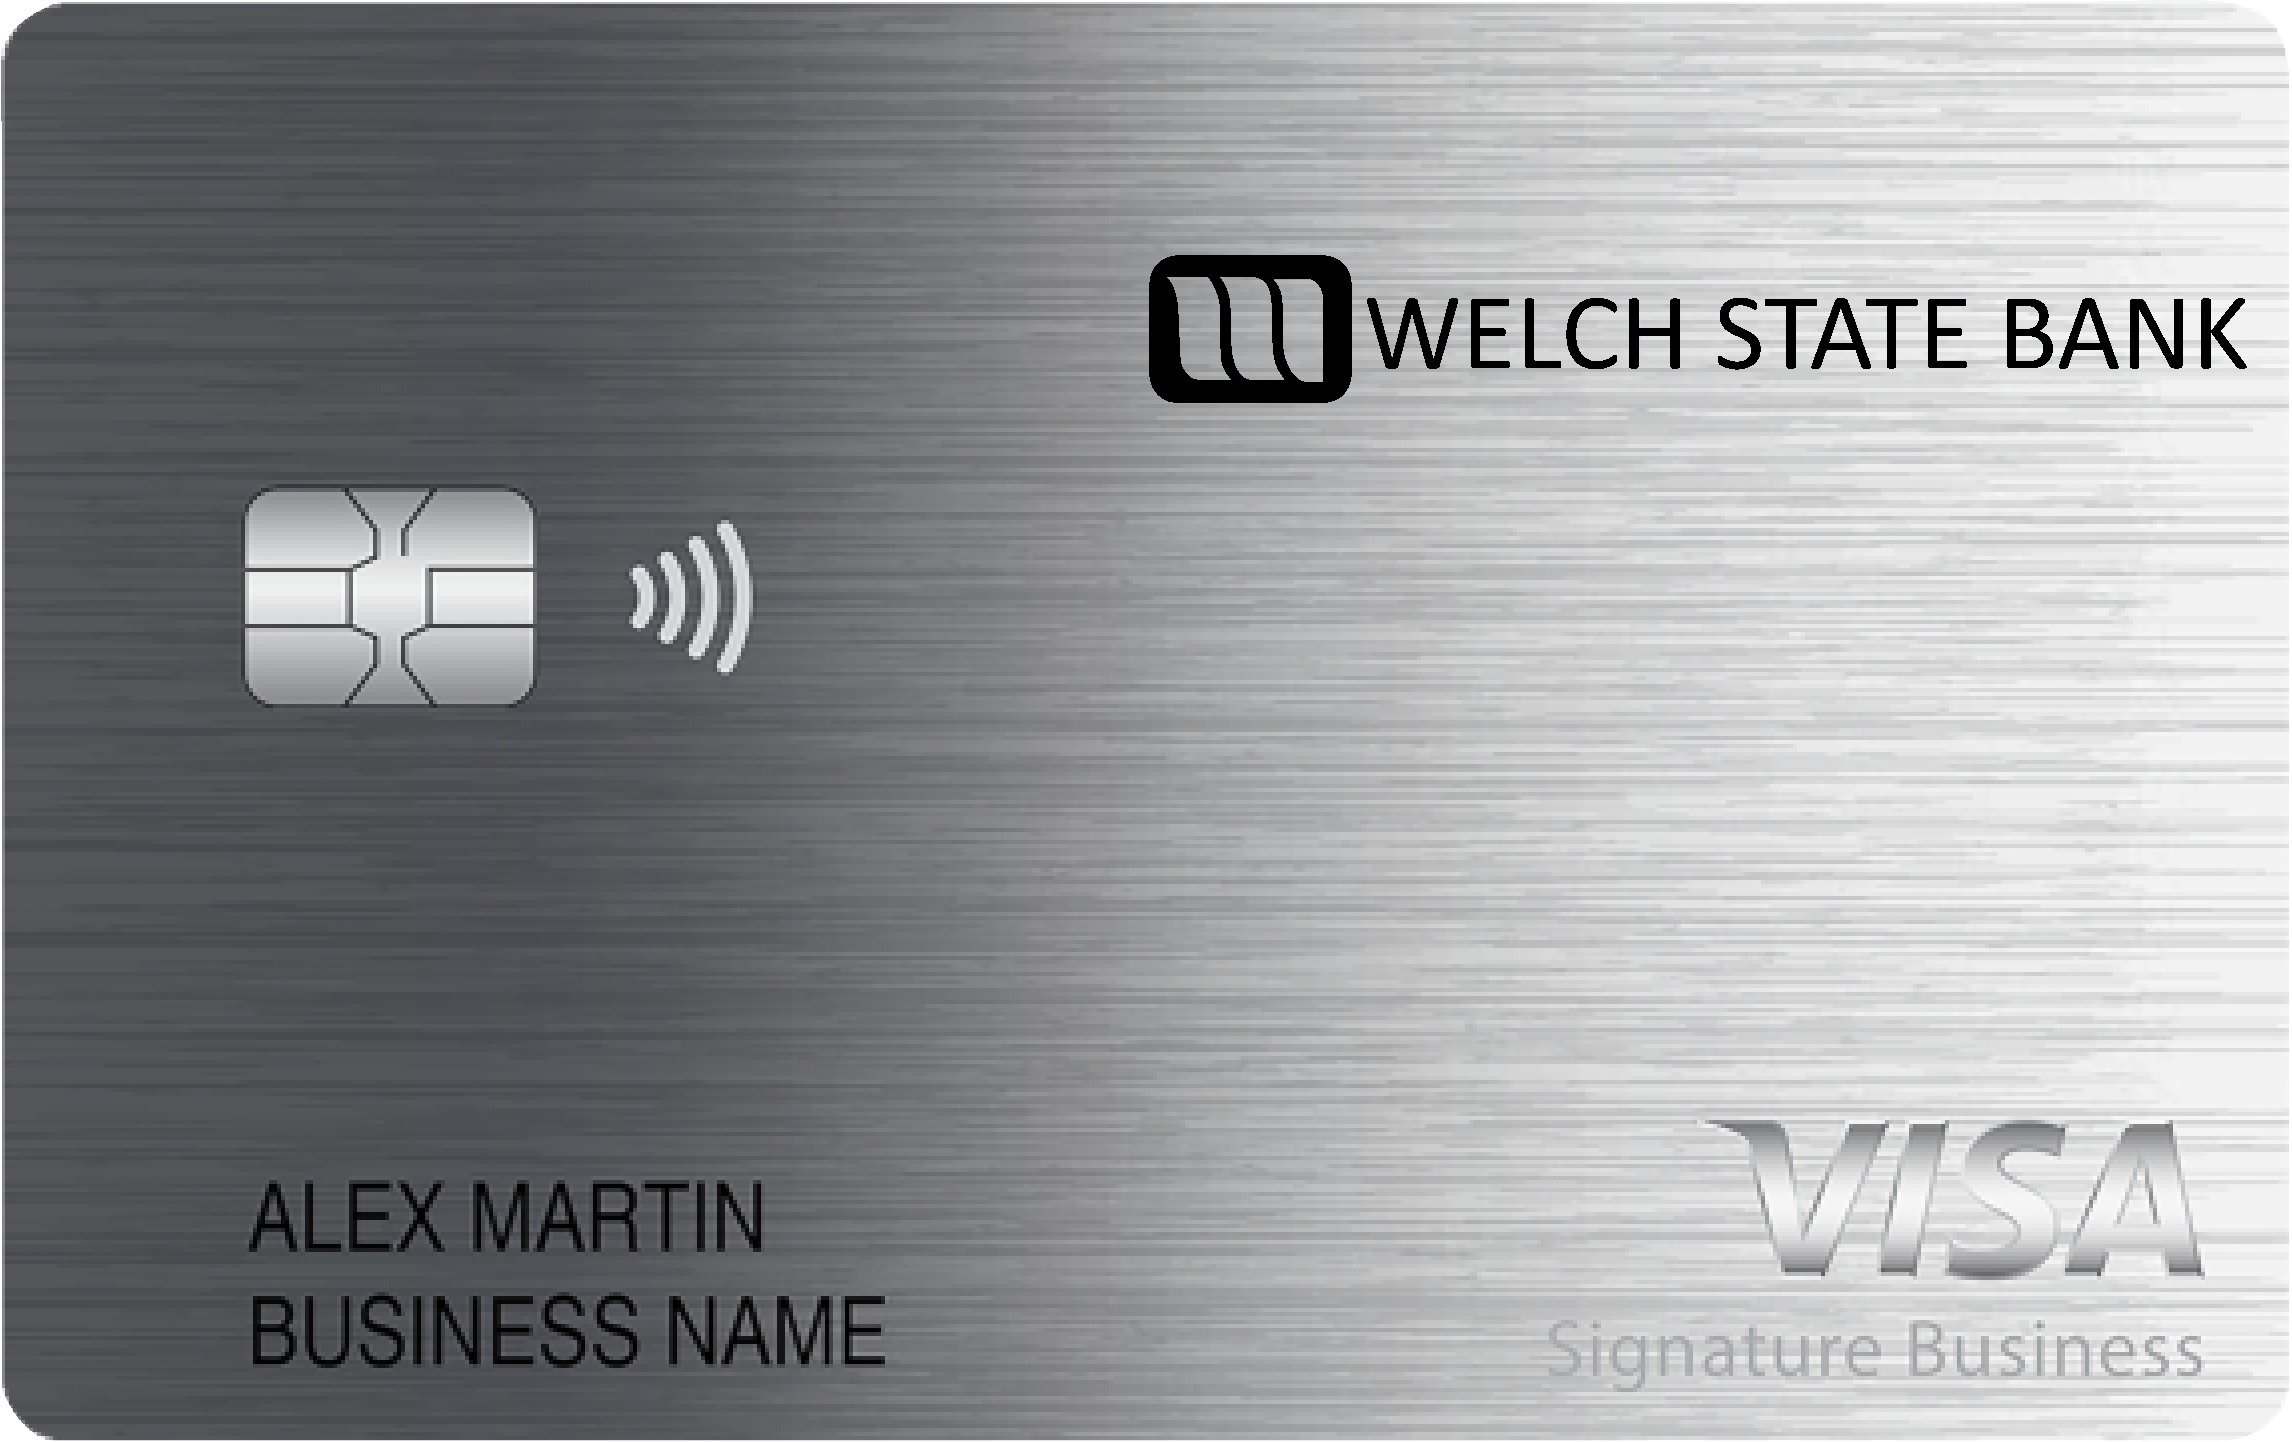 Welch State Bank Smart Business Rewards Card